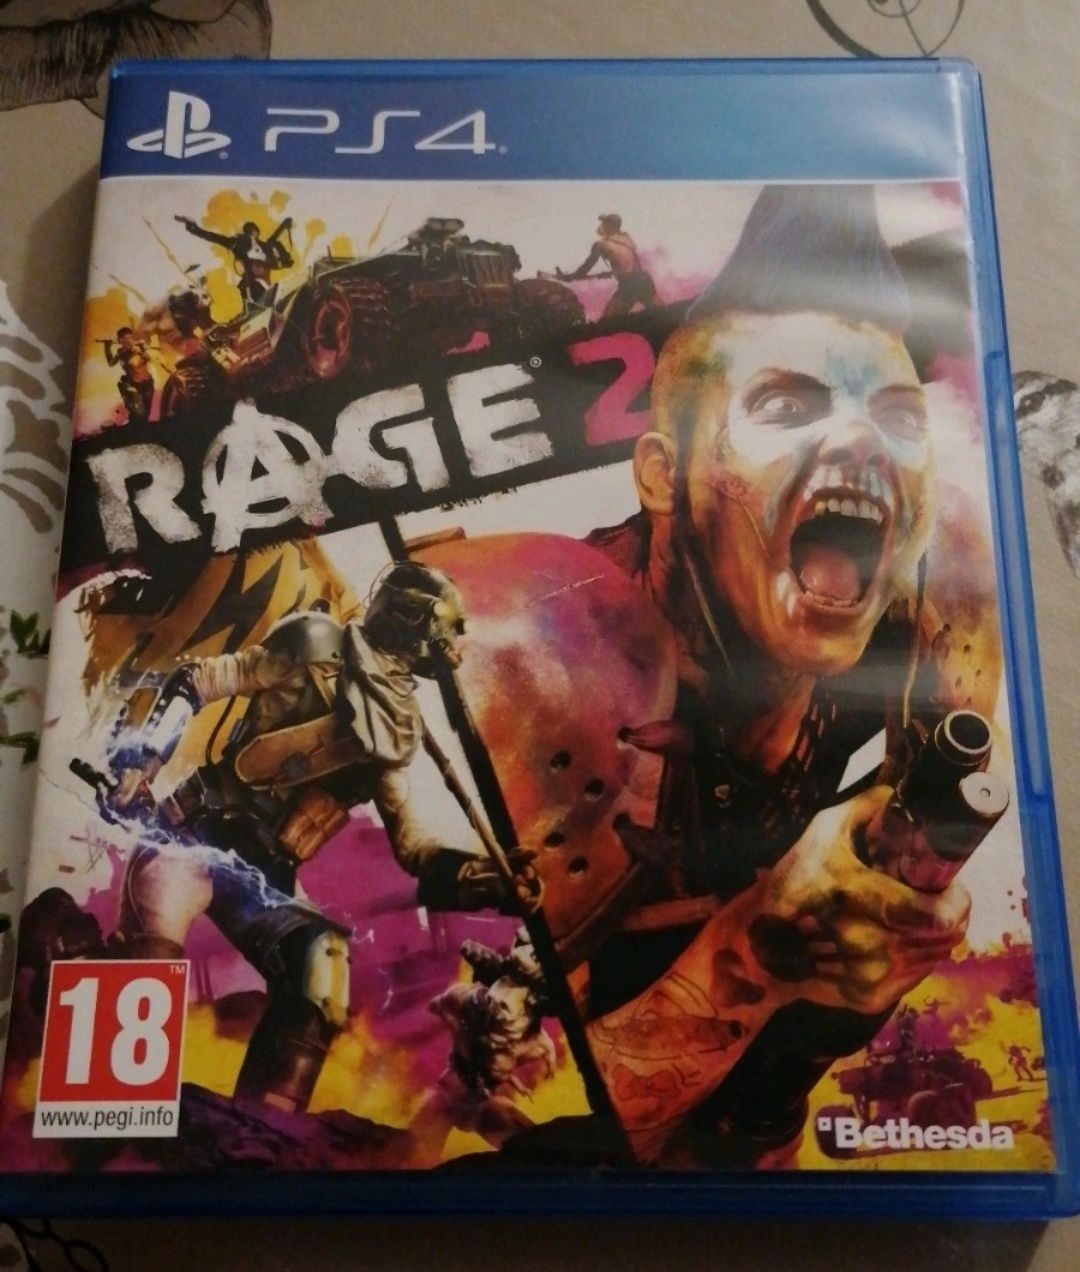 Rage 2 - PlayStation 4